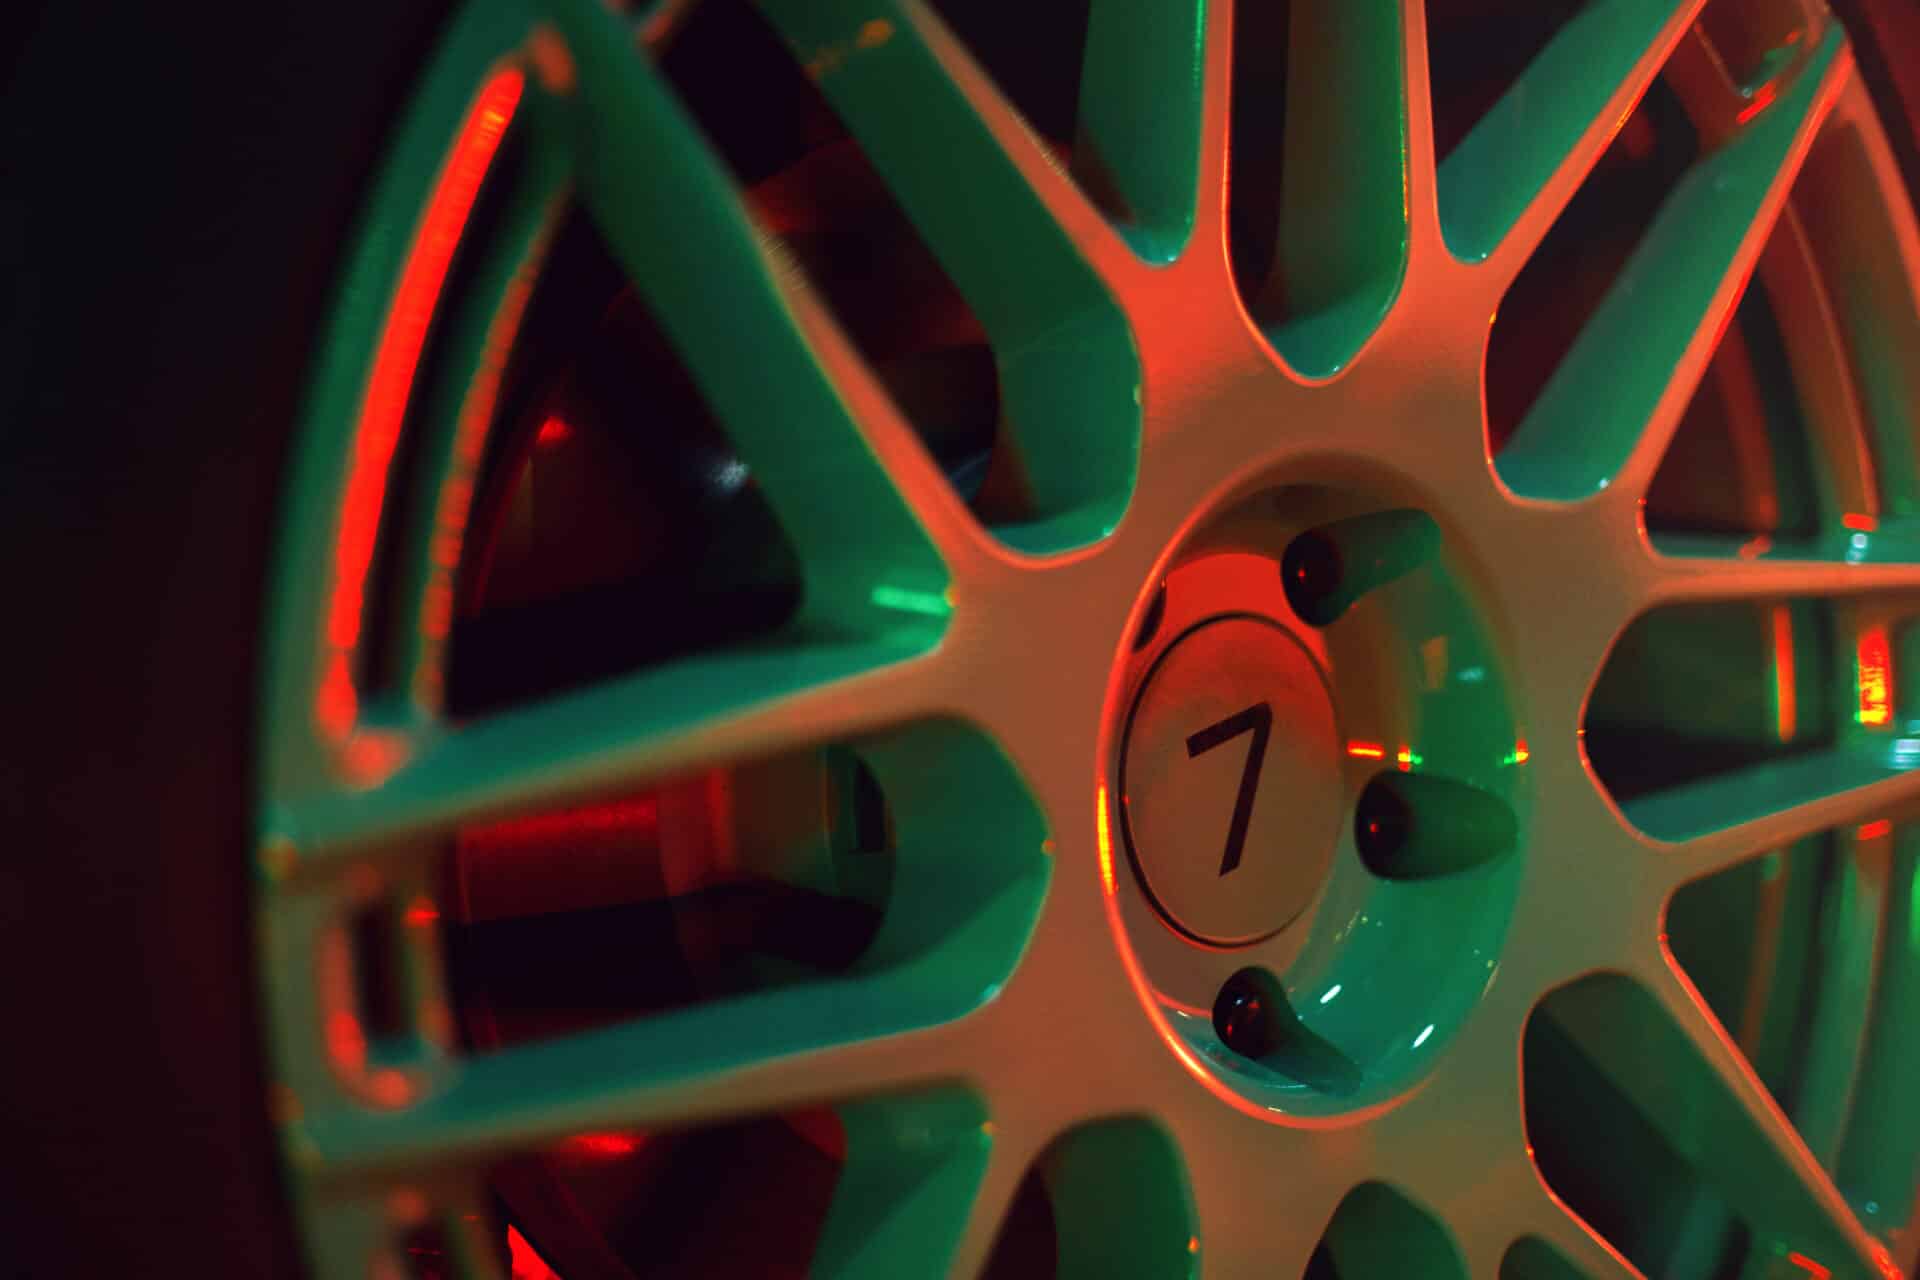 7 Eleven car night wheels rims retouch cg